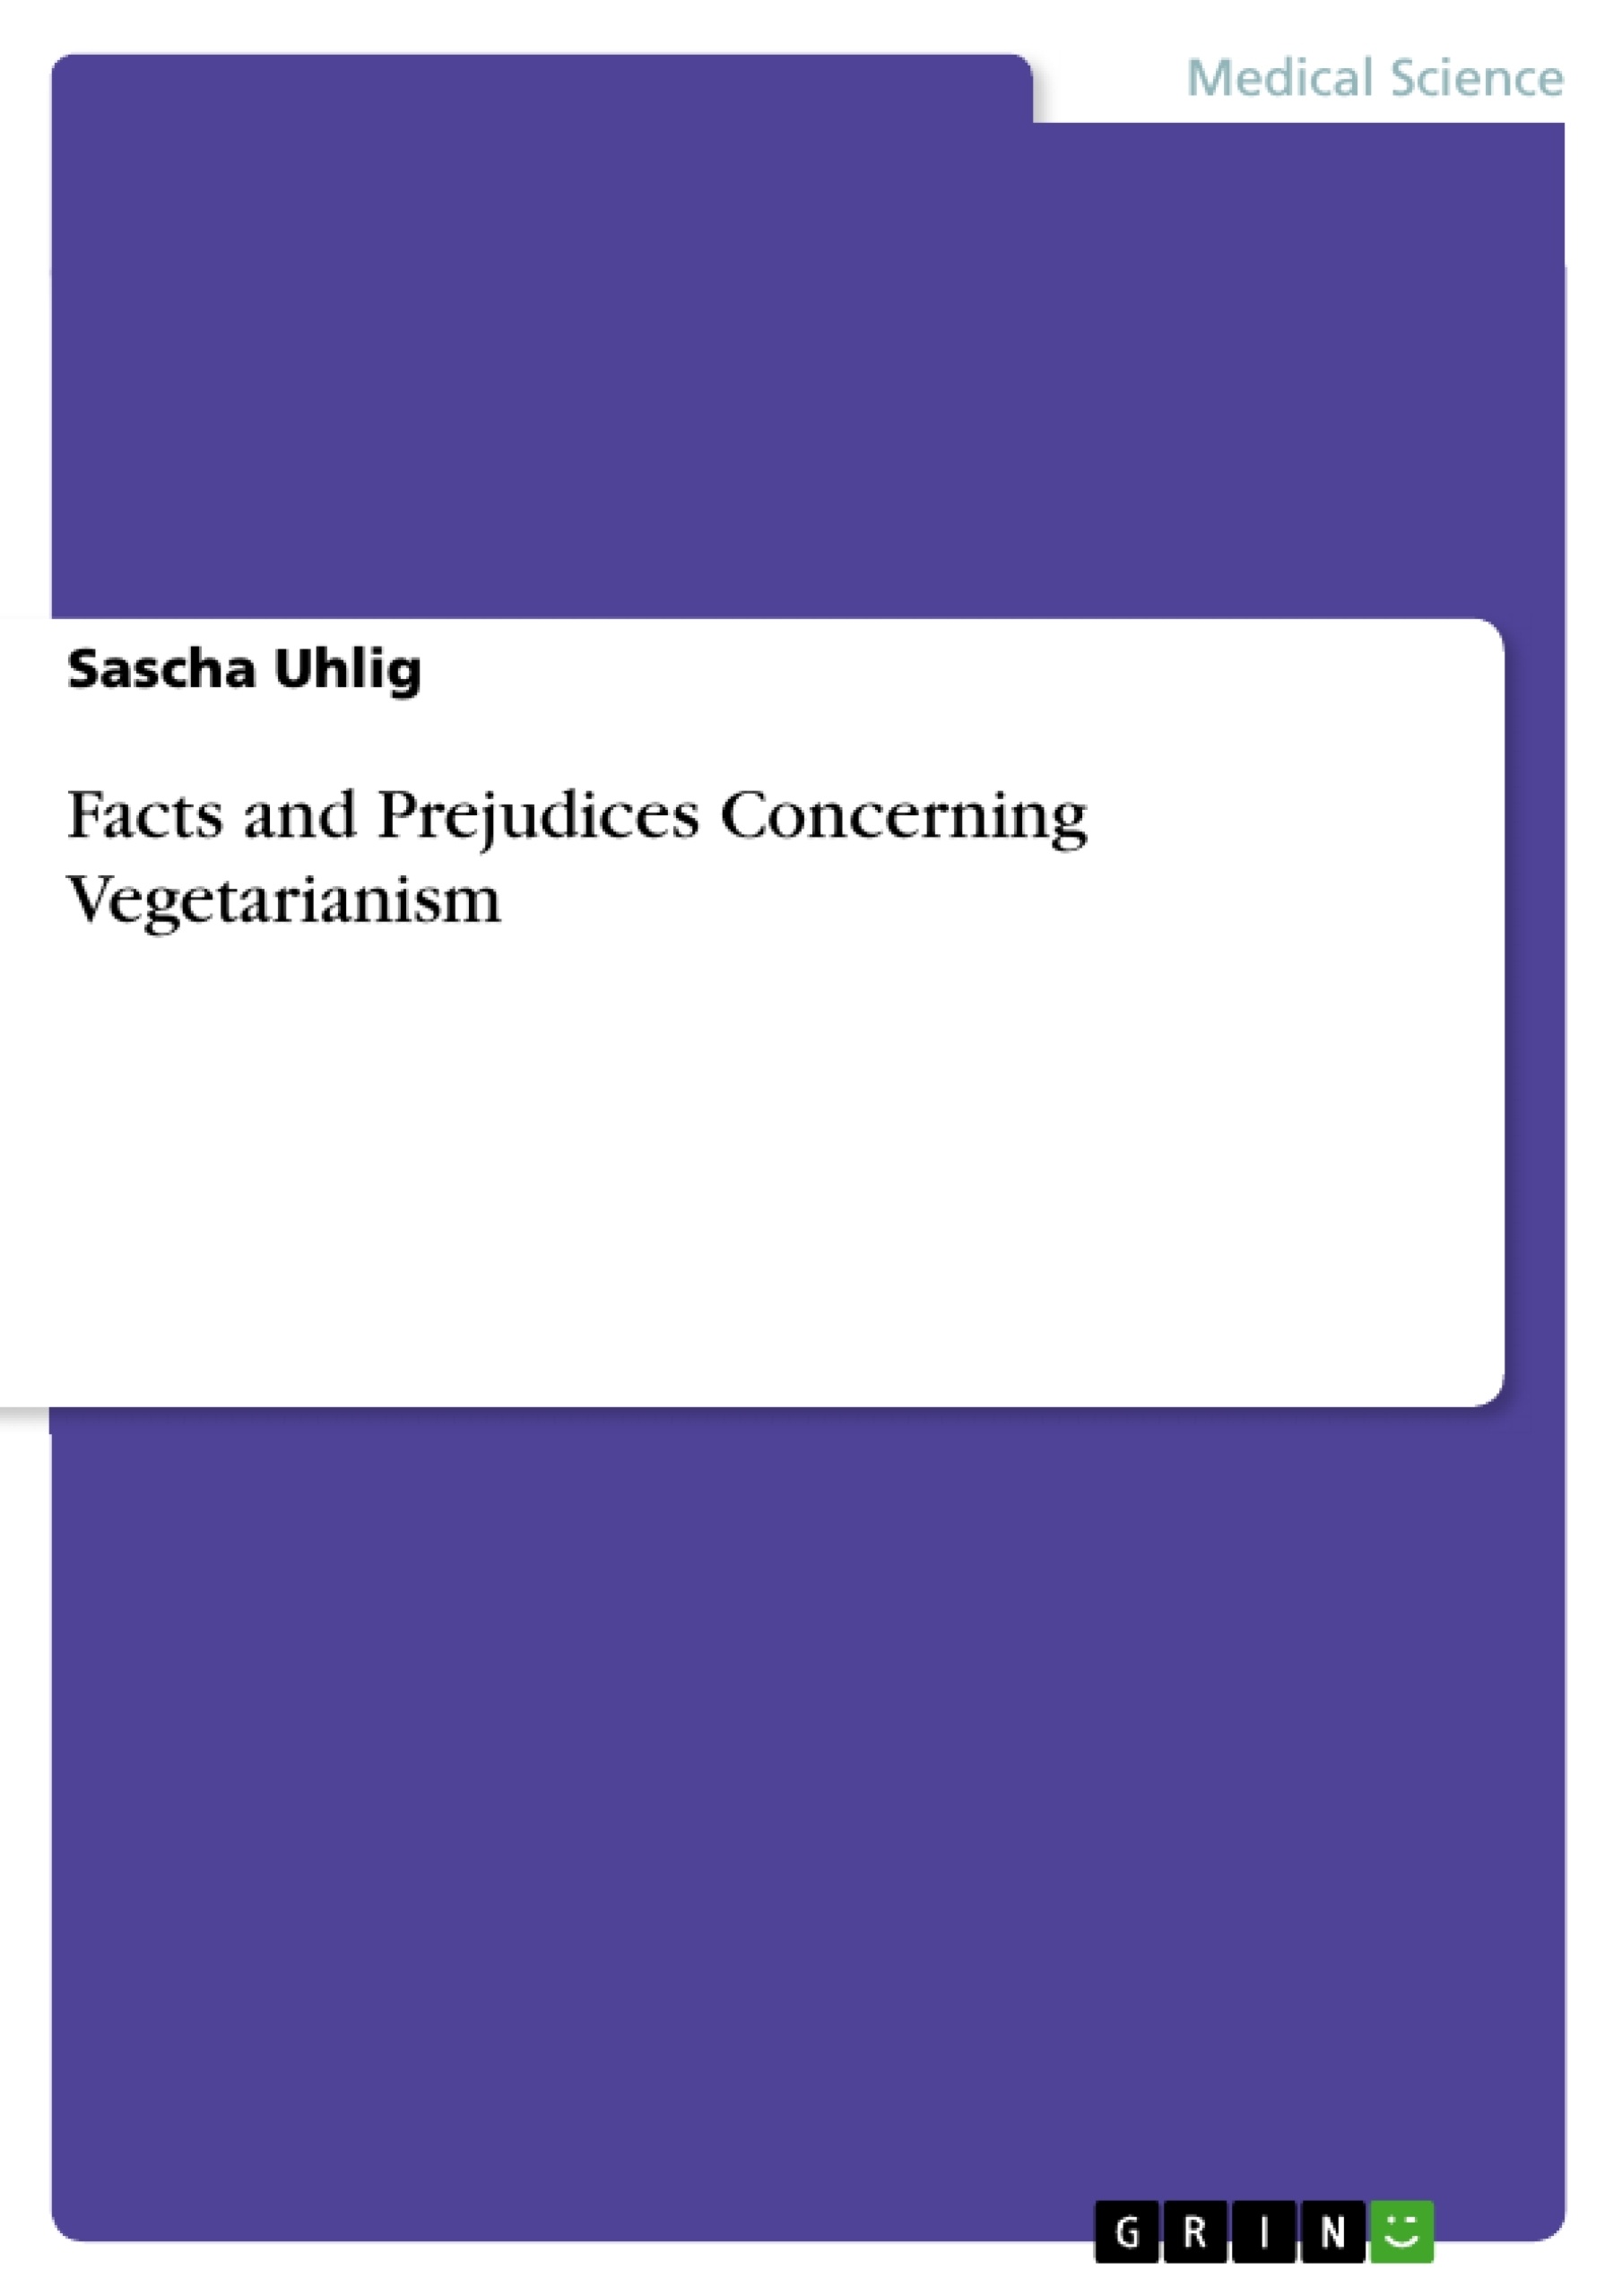 Title: Facts and Prejudices Concerning Vegetarianism